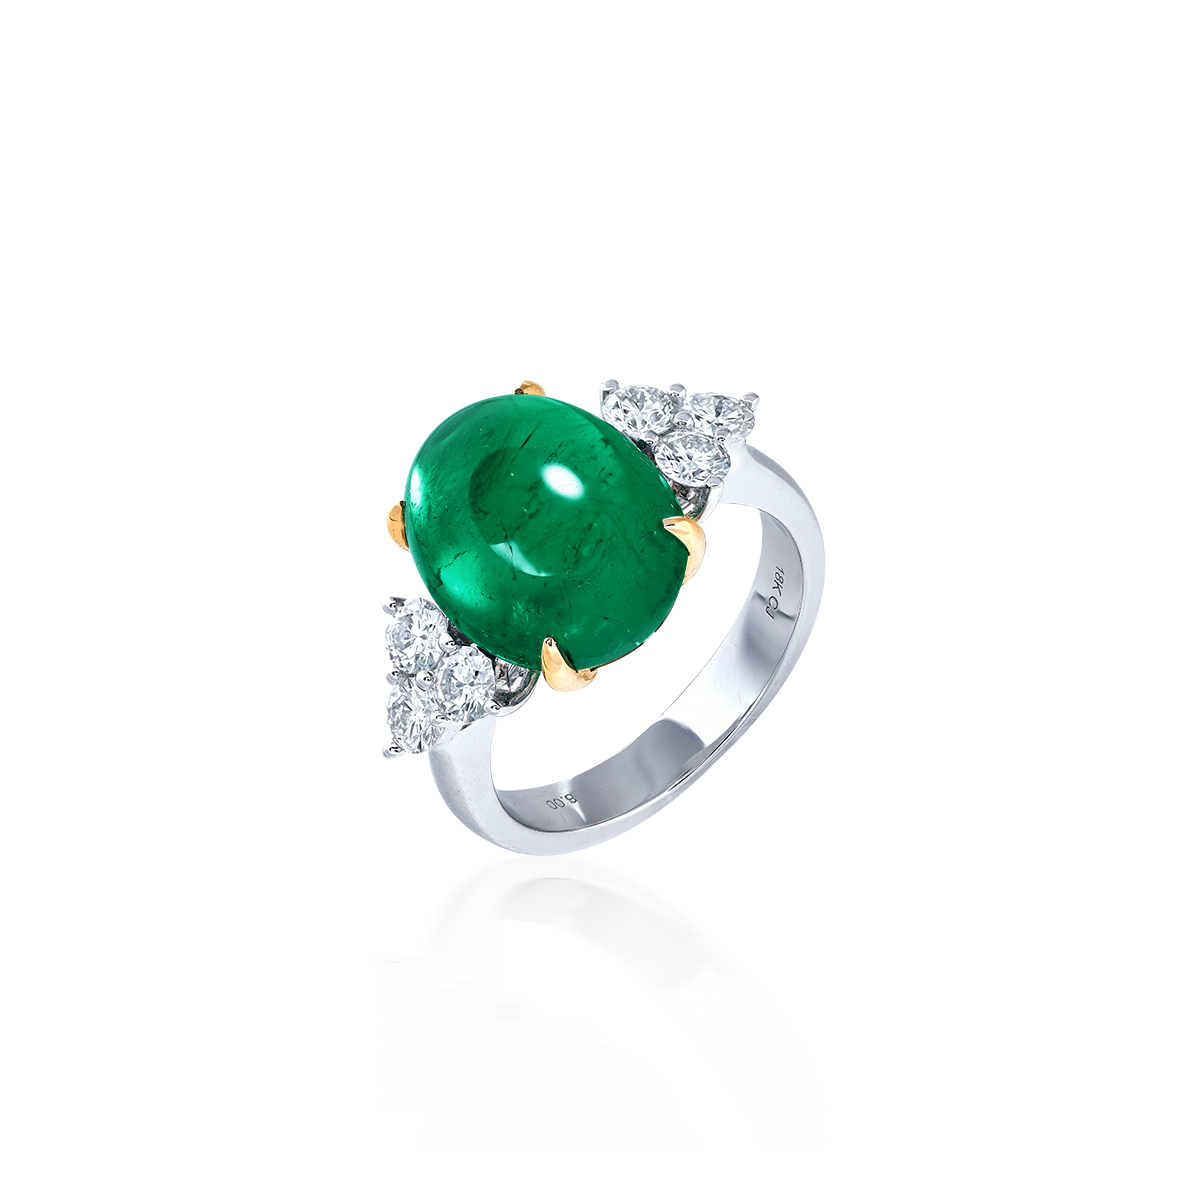 8.00克拉 哥倫比亞天然MUZO GREEN祖母綠鑽戒
Colombian MUZO Green Emerald 
and Diamond Ring